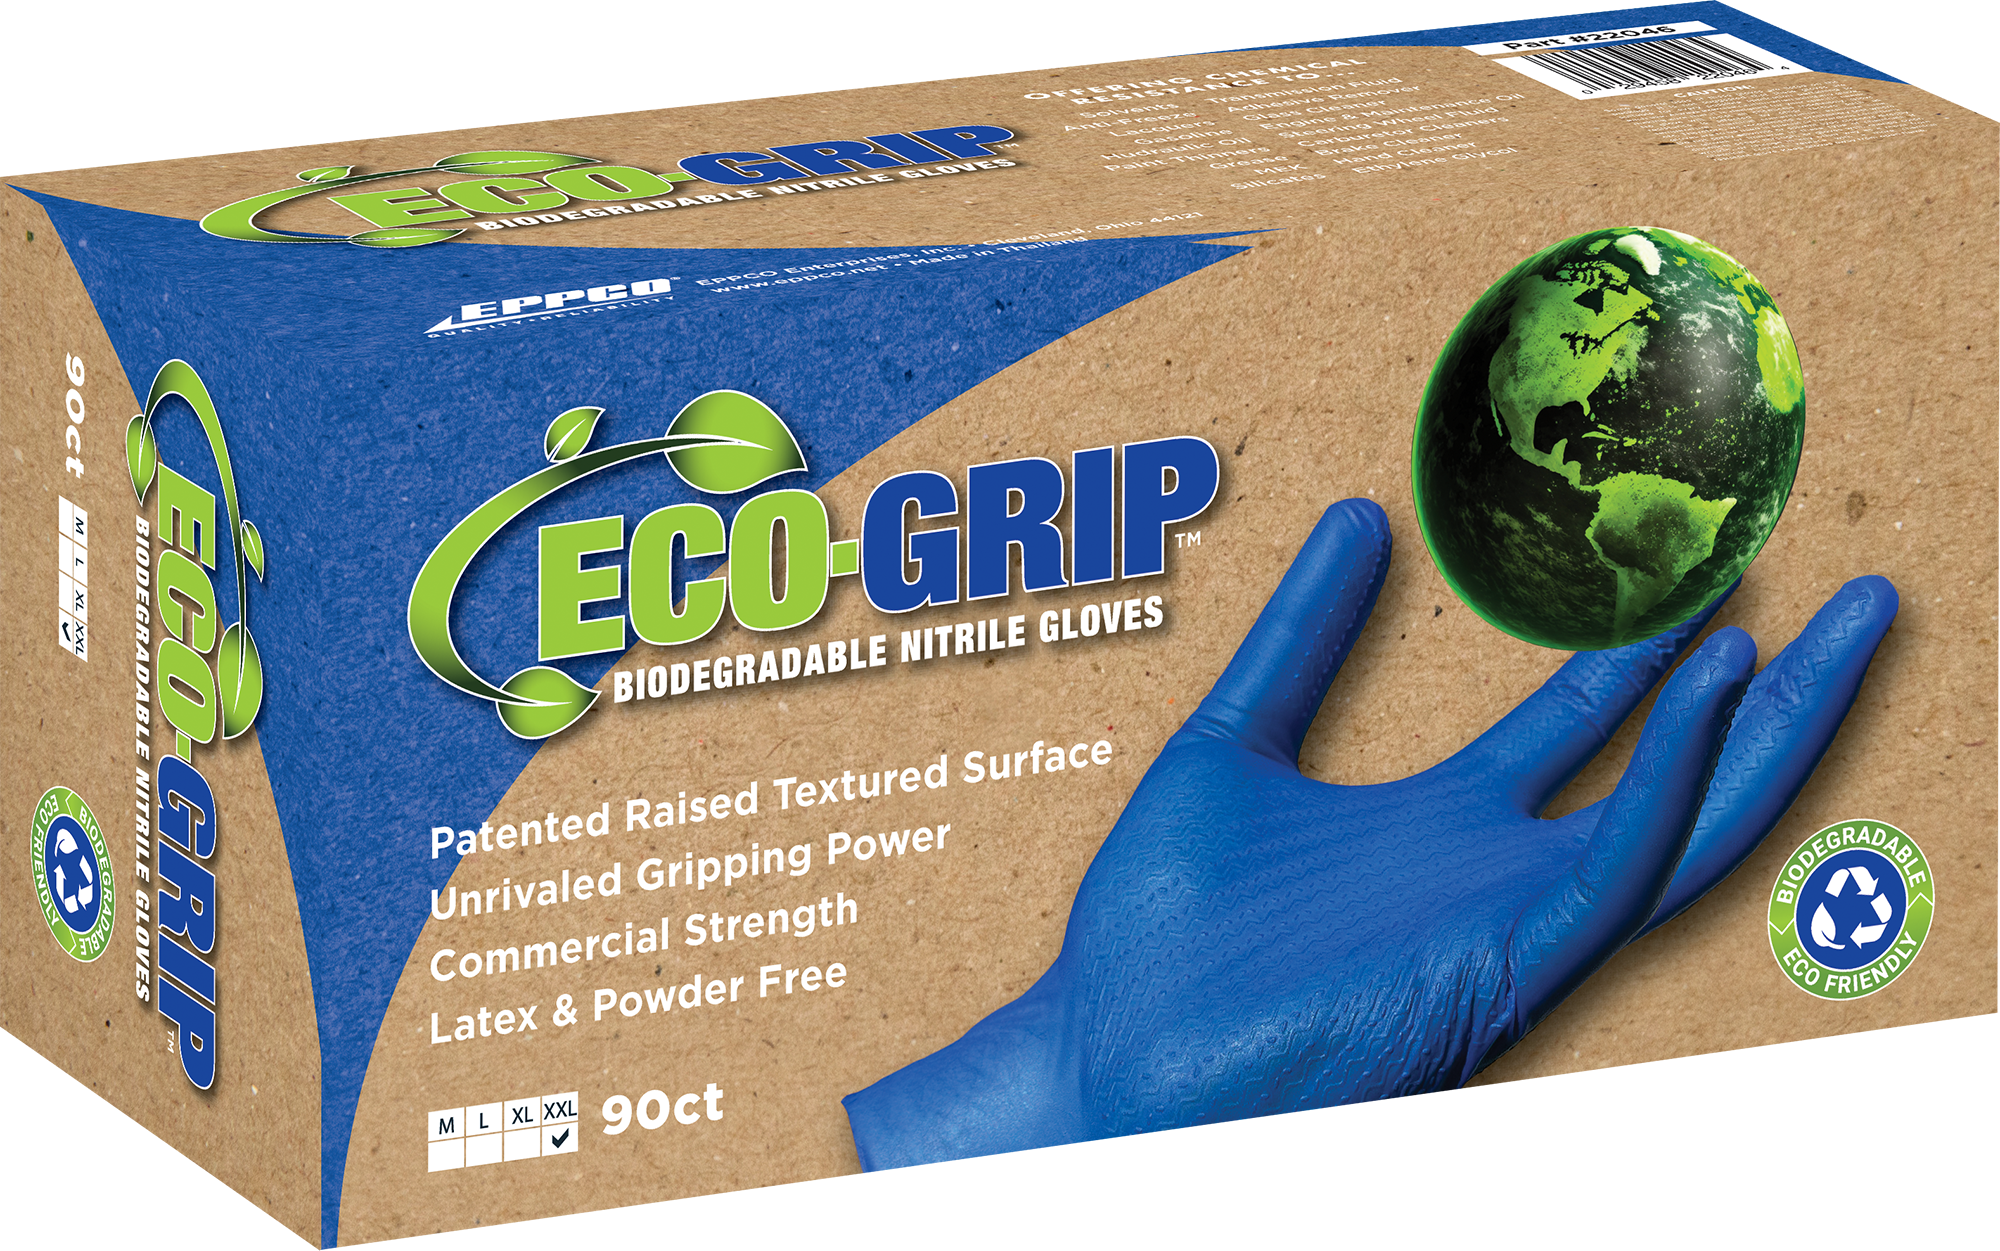 Eco-Grip Biodegradable Nitrile Gloves